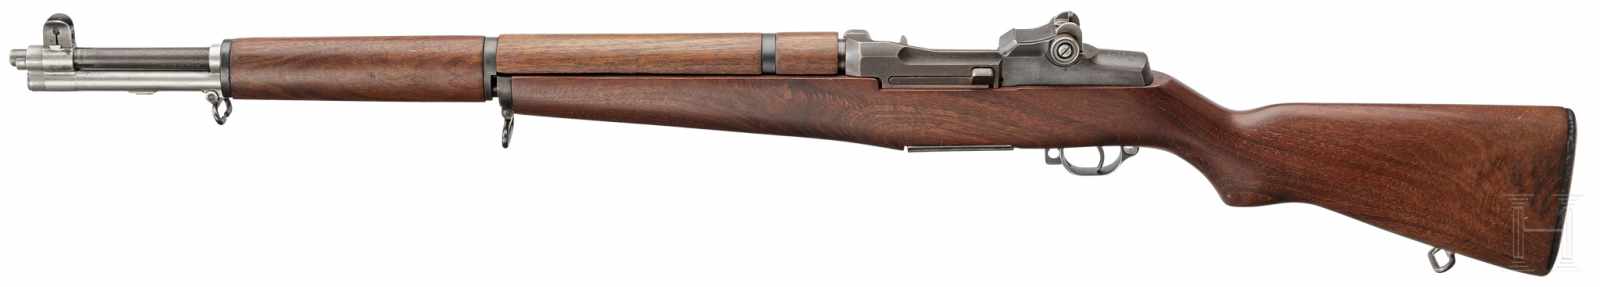 A Garand M 1 Rifle, Springfield - Image 2 of 3